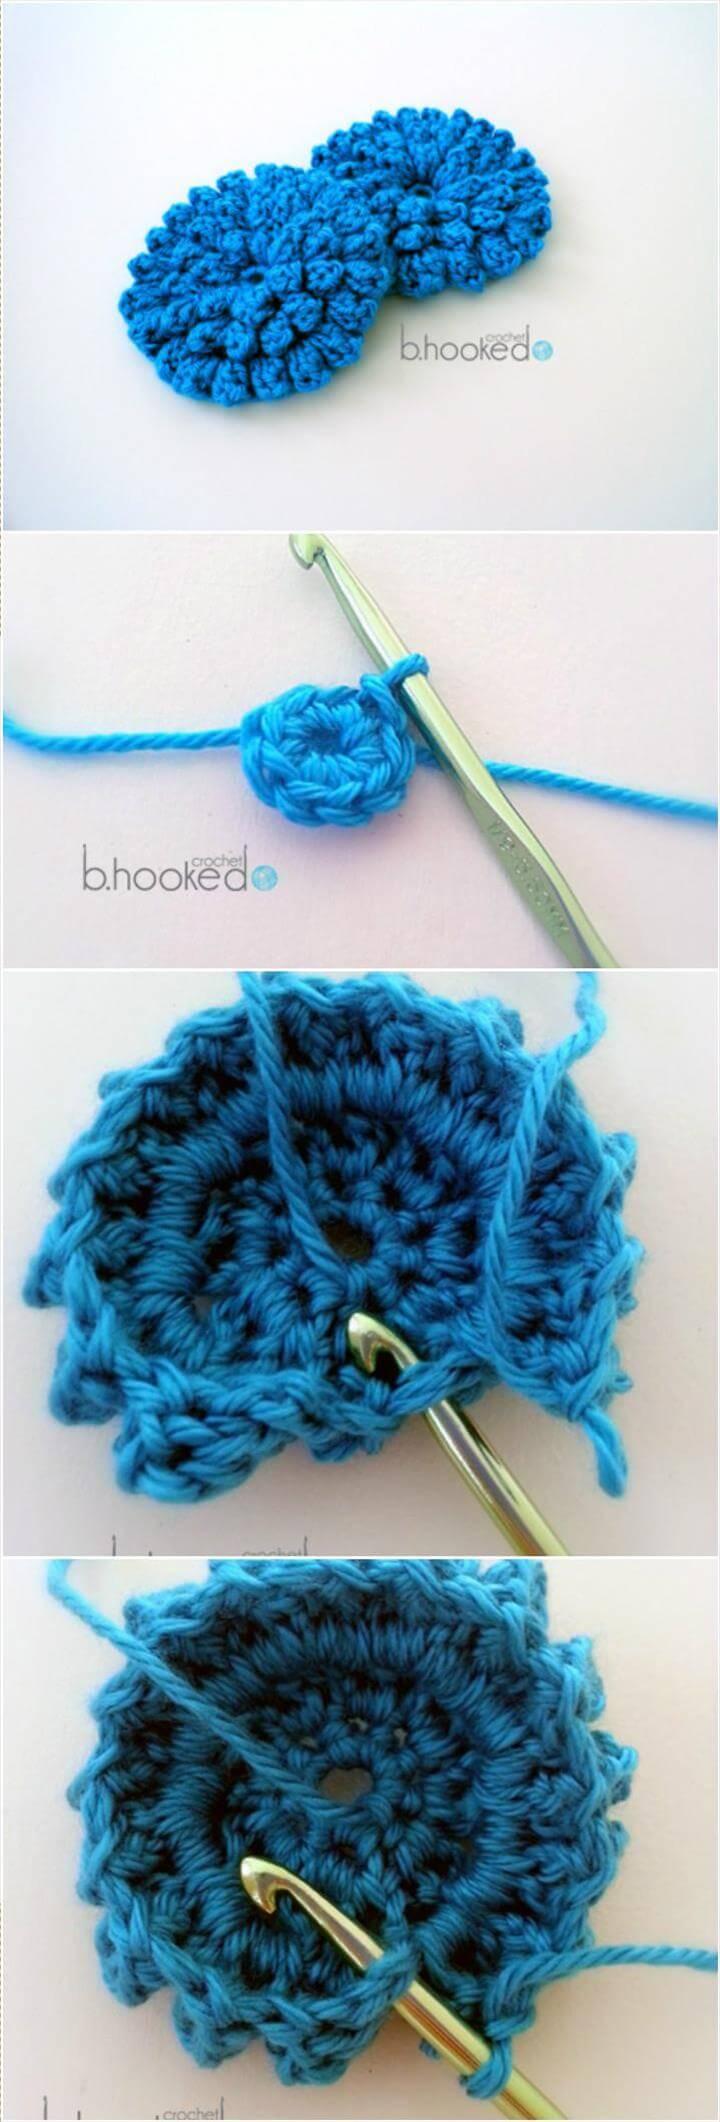 diy crochet popcorn stitch flower